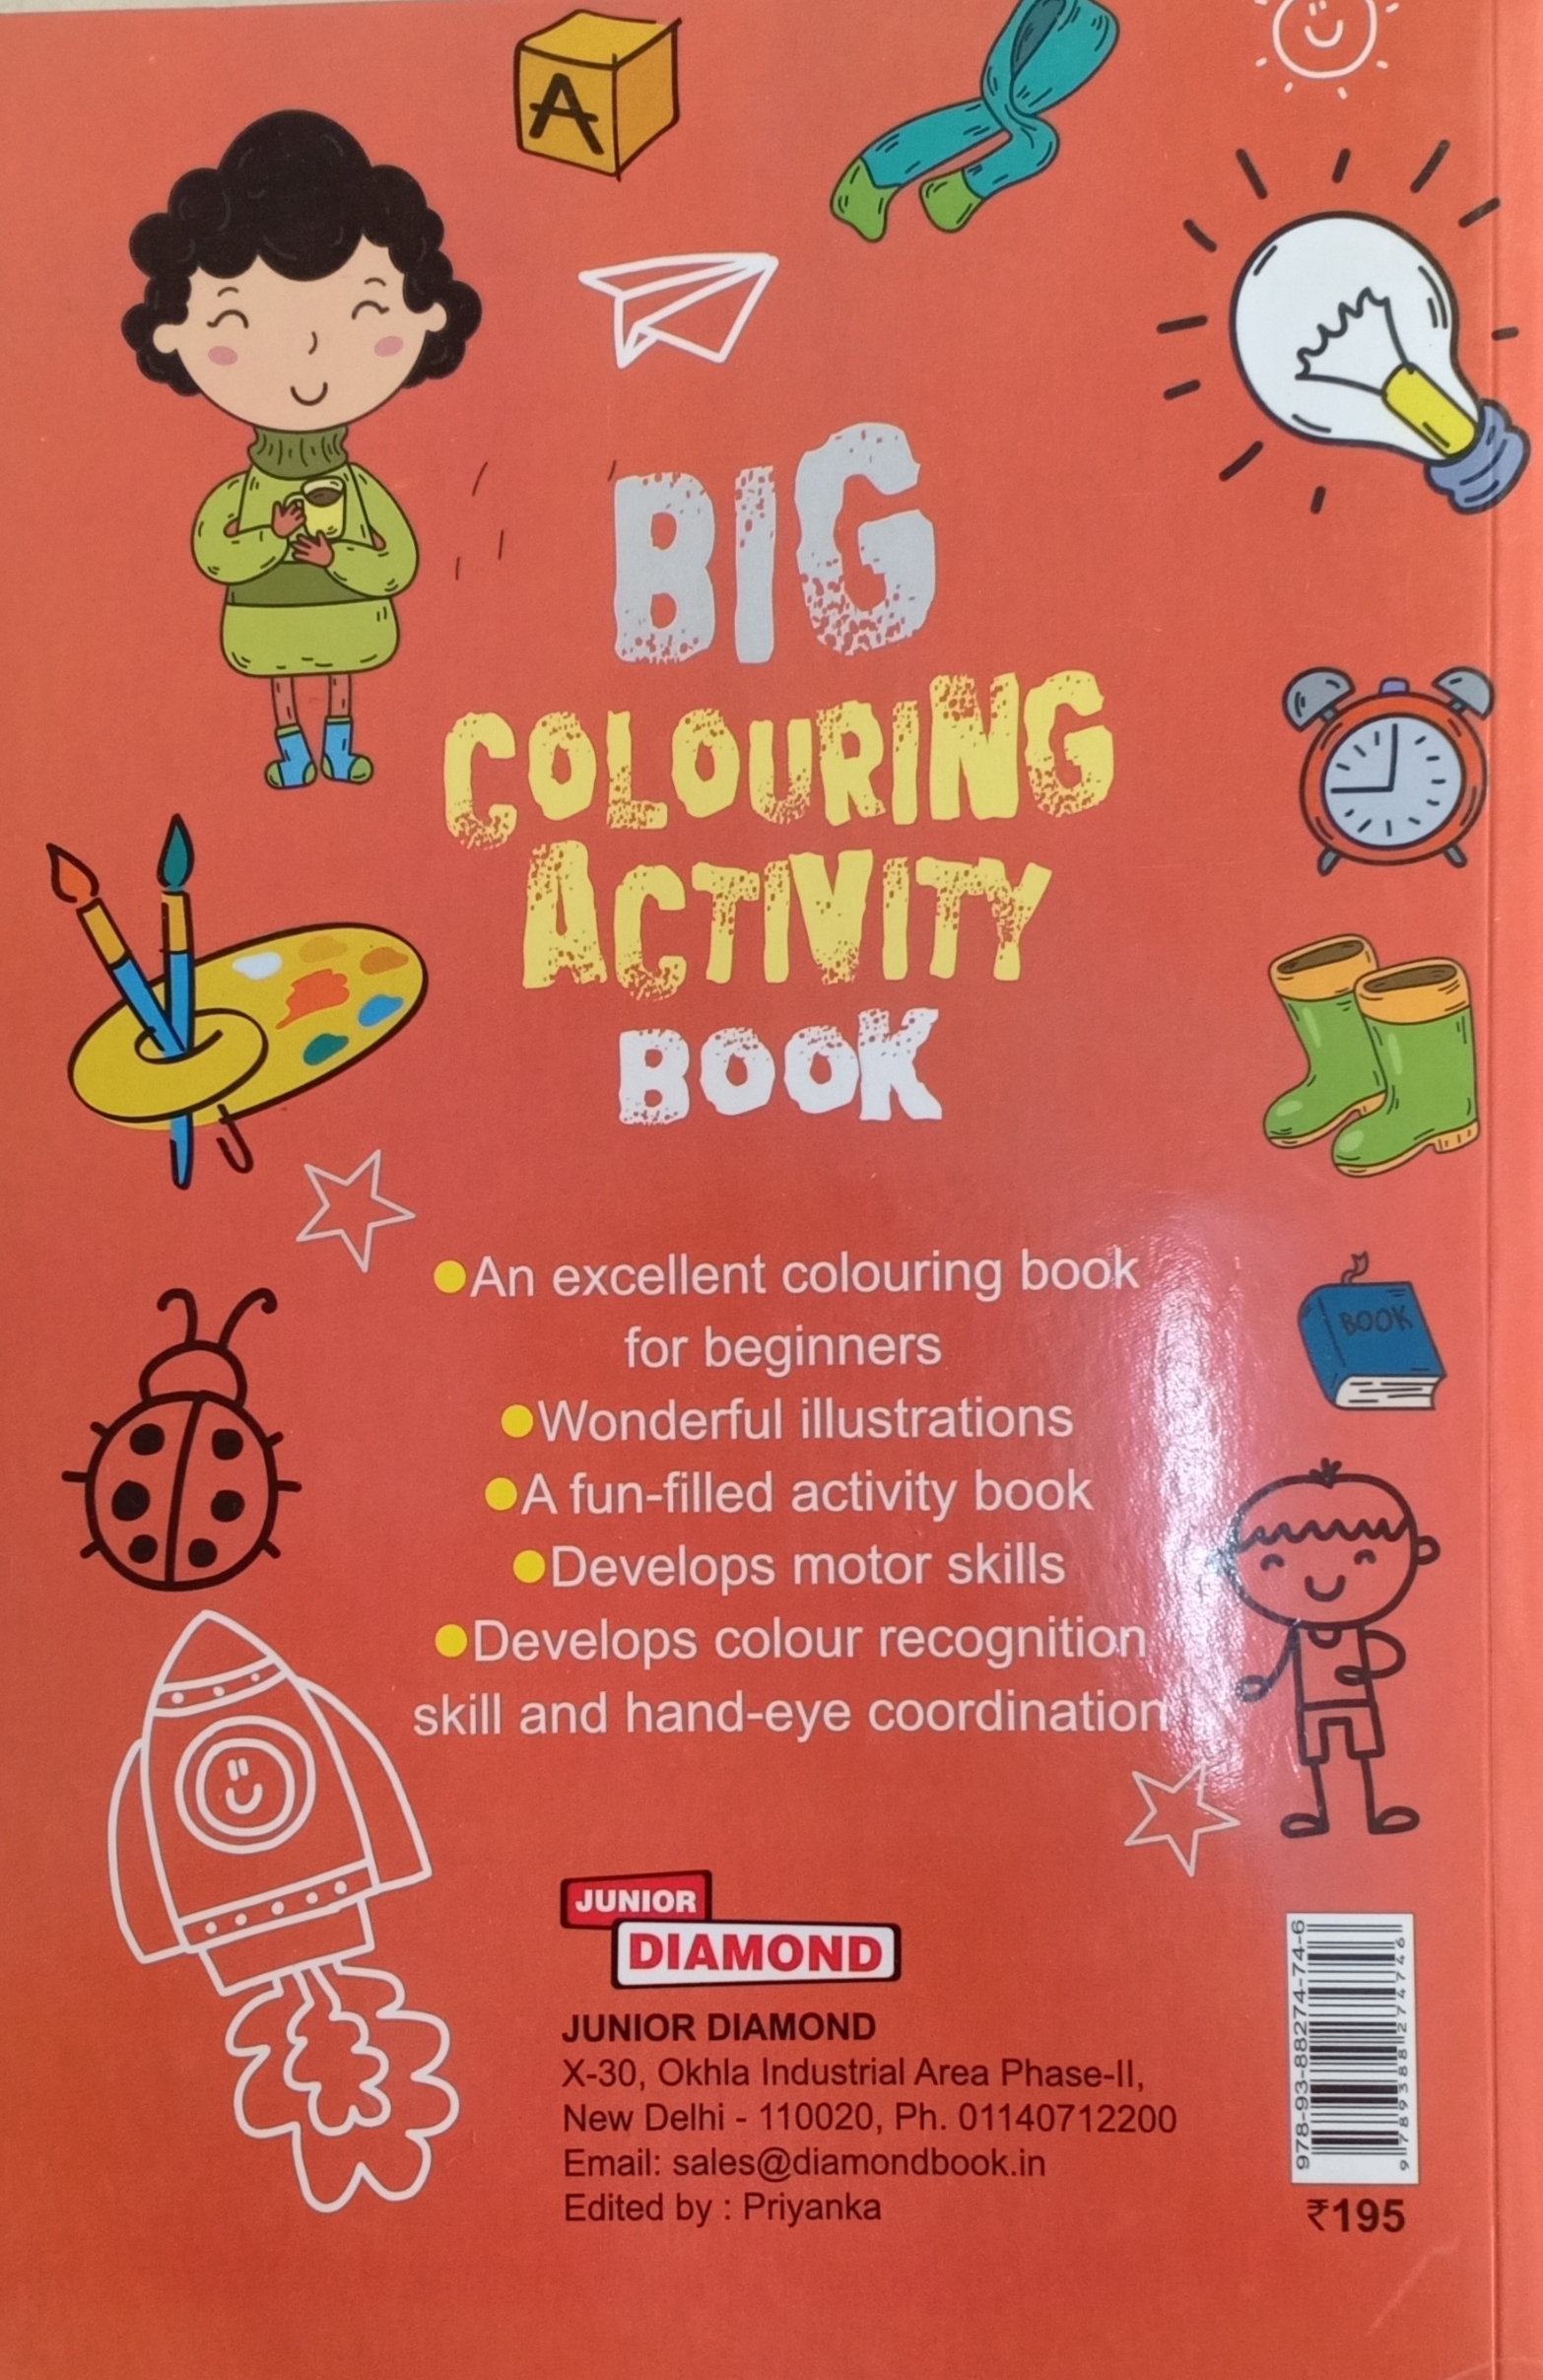 Big Coloring Activity Book